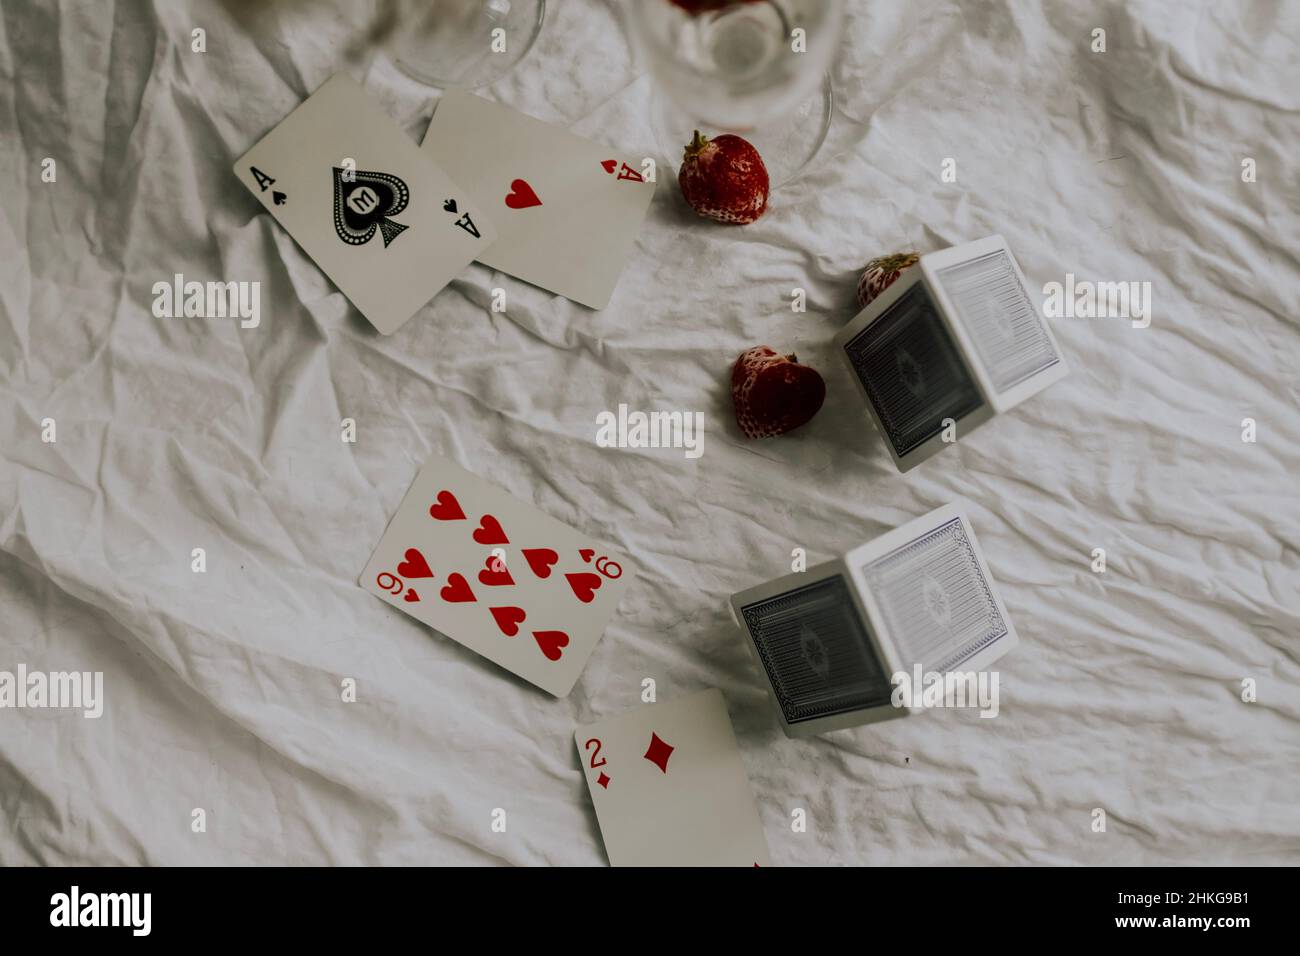 carte da gioco su tavola bianca bella arte flatlay. Foto di alta qualità Foto Stock